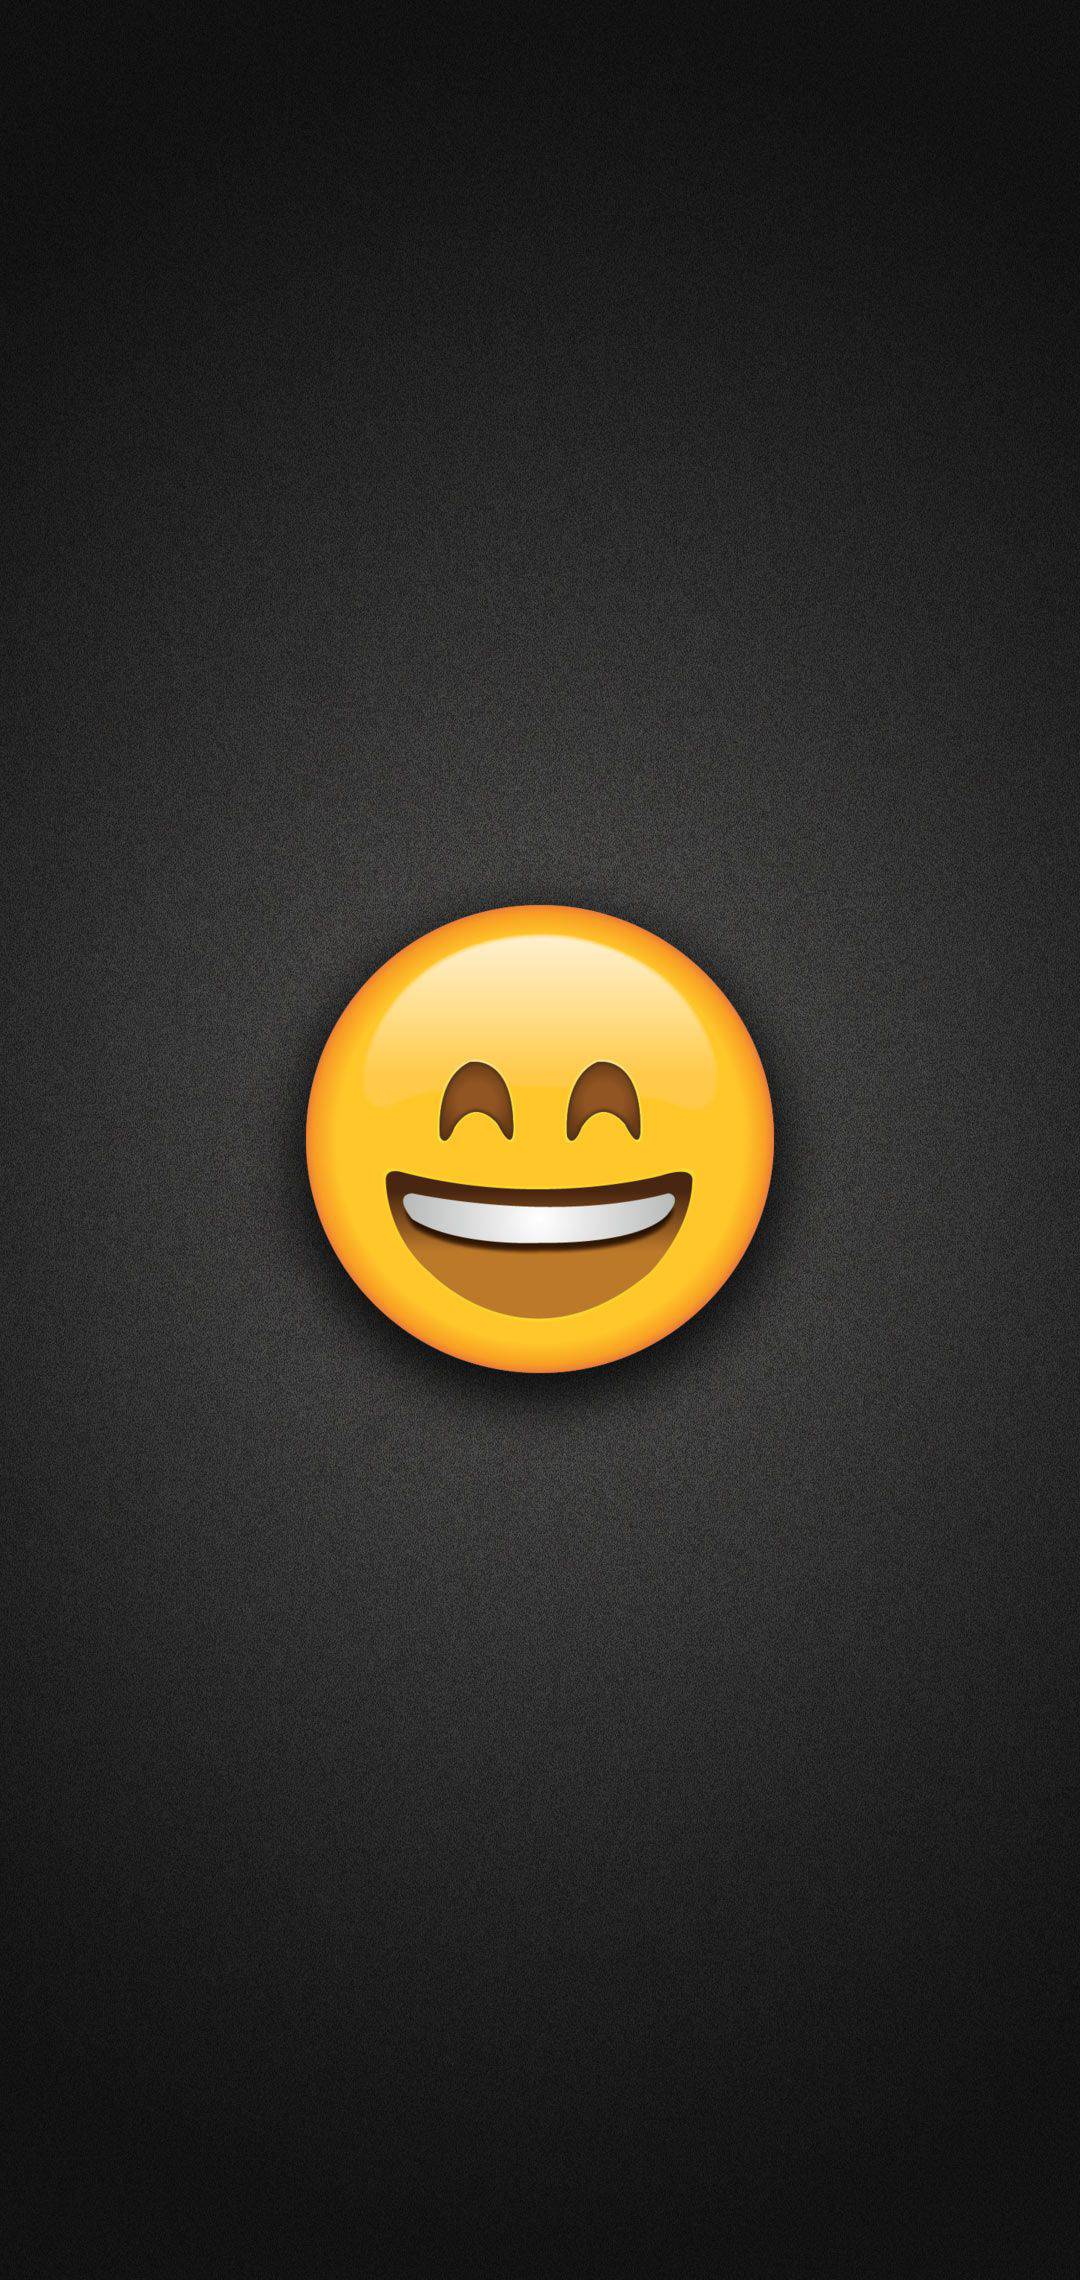 50+] Smile Emoji DP for Whatsapp (HD) - PhotosFile